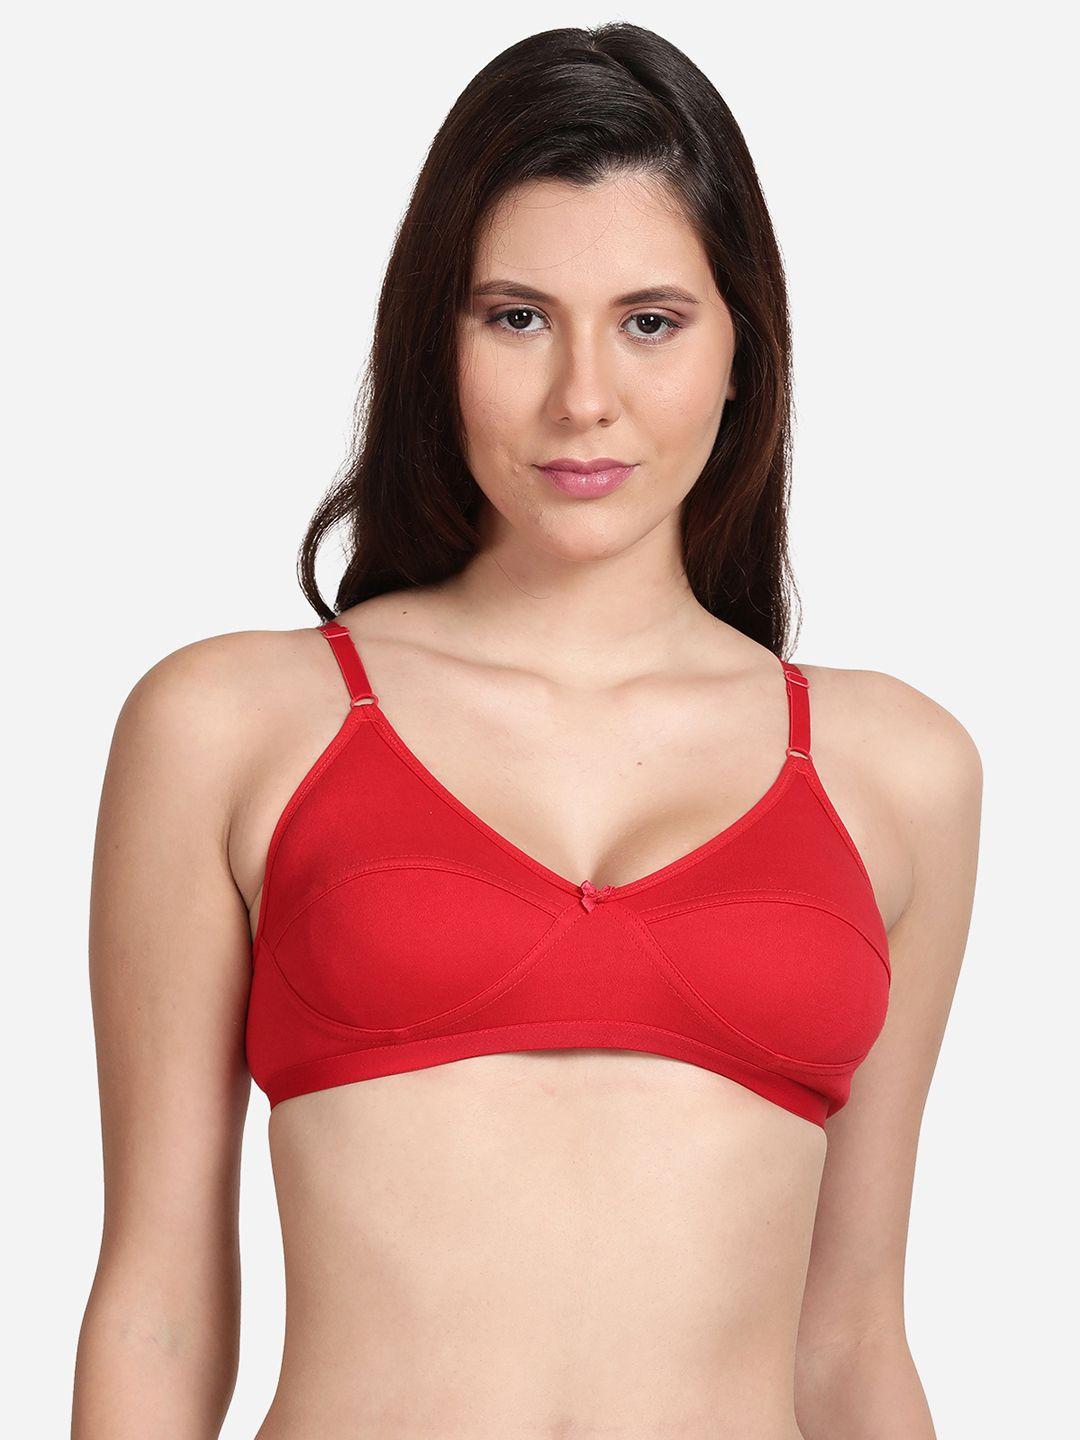 shyaway-women-red-non-padded-bra